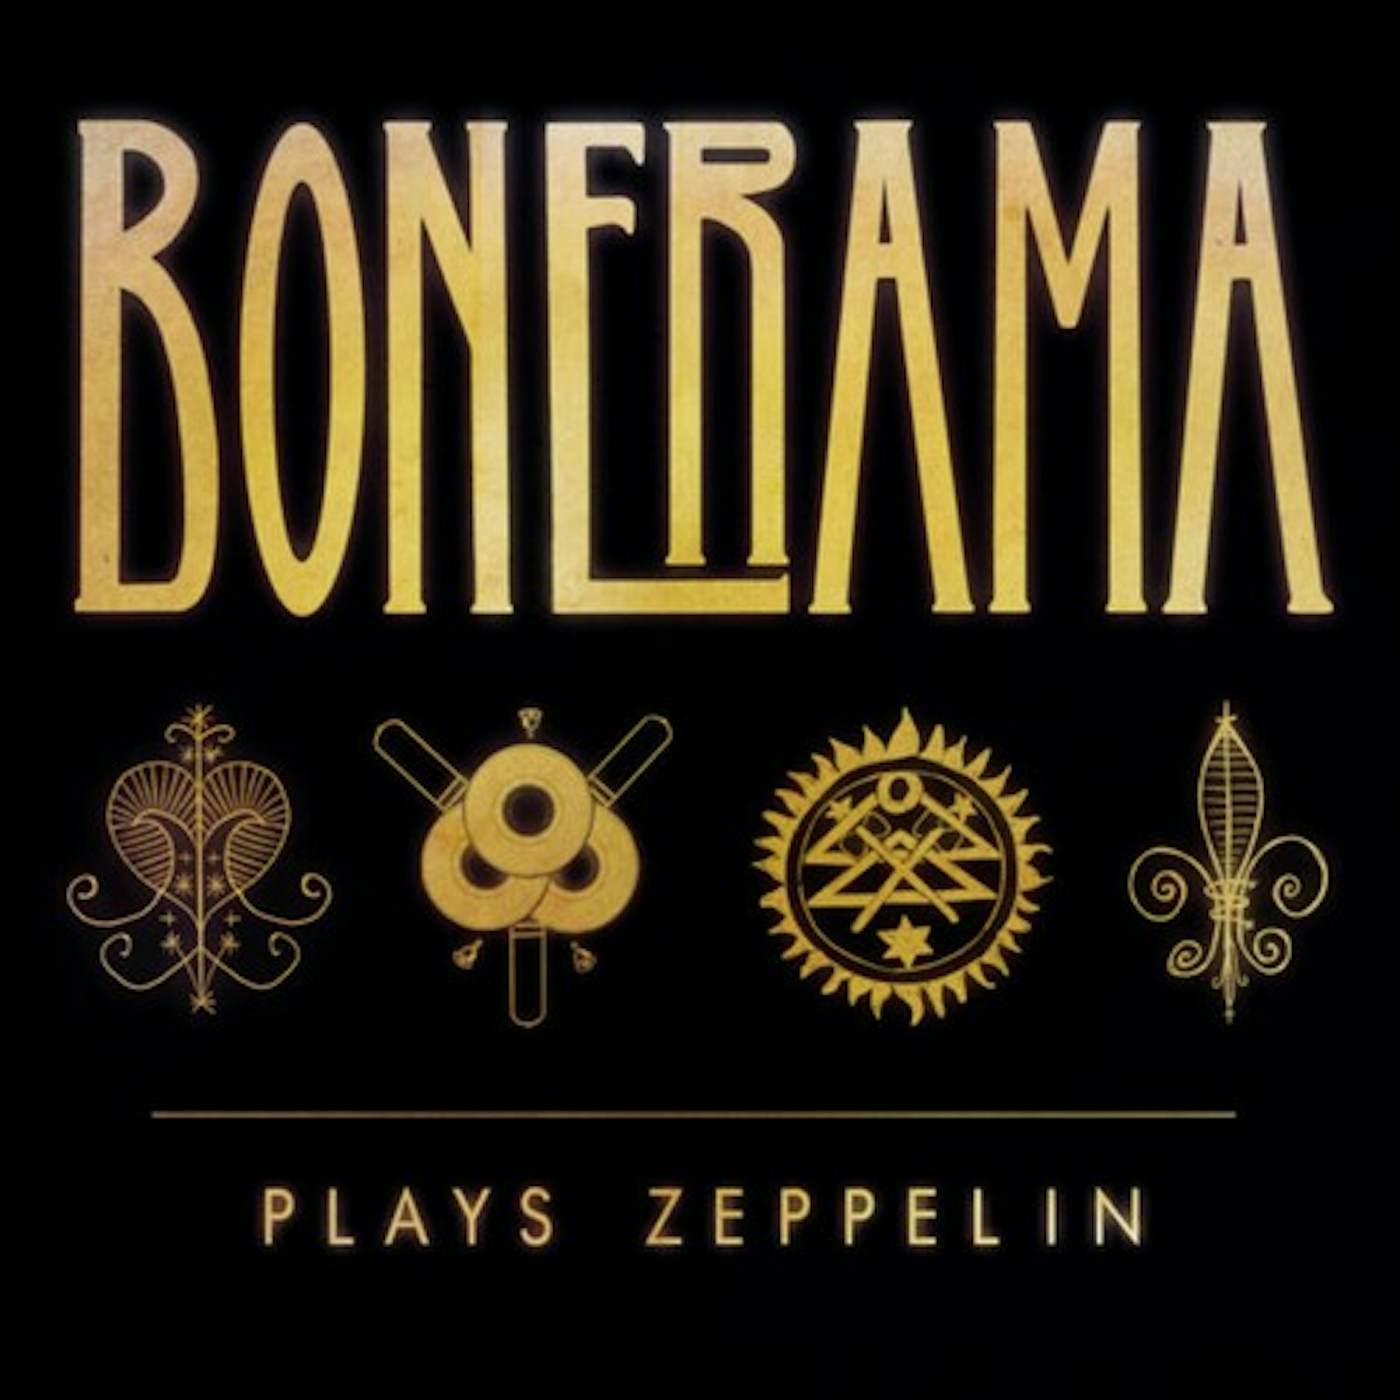 Bonerama Plays Zeppelin Vinyl Record